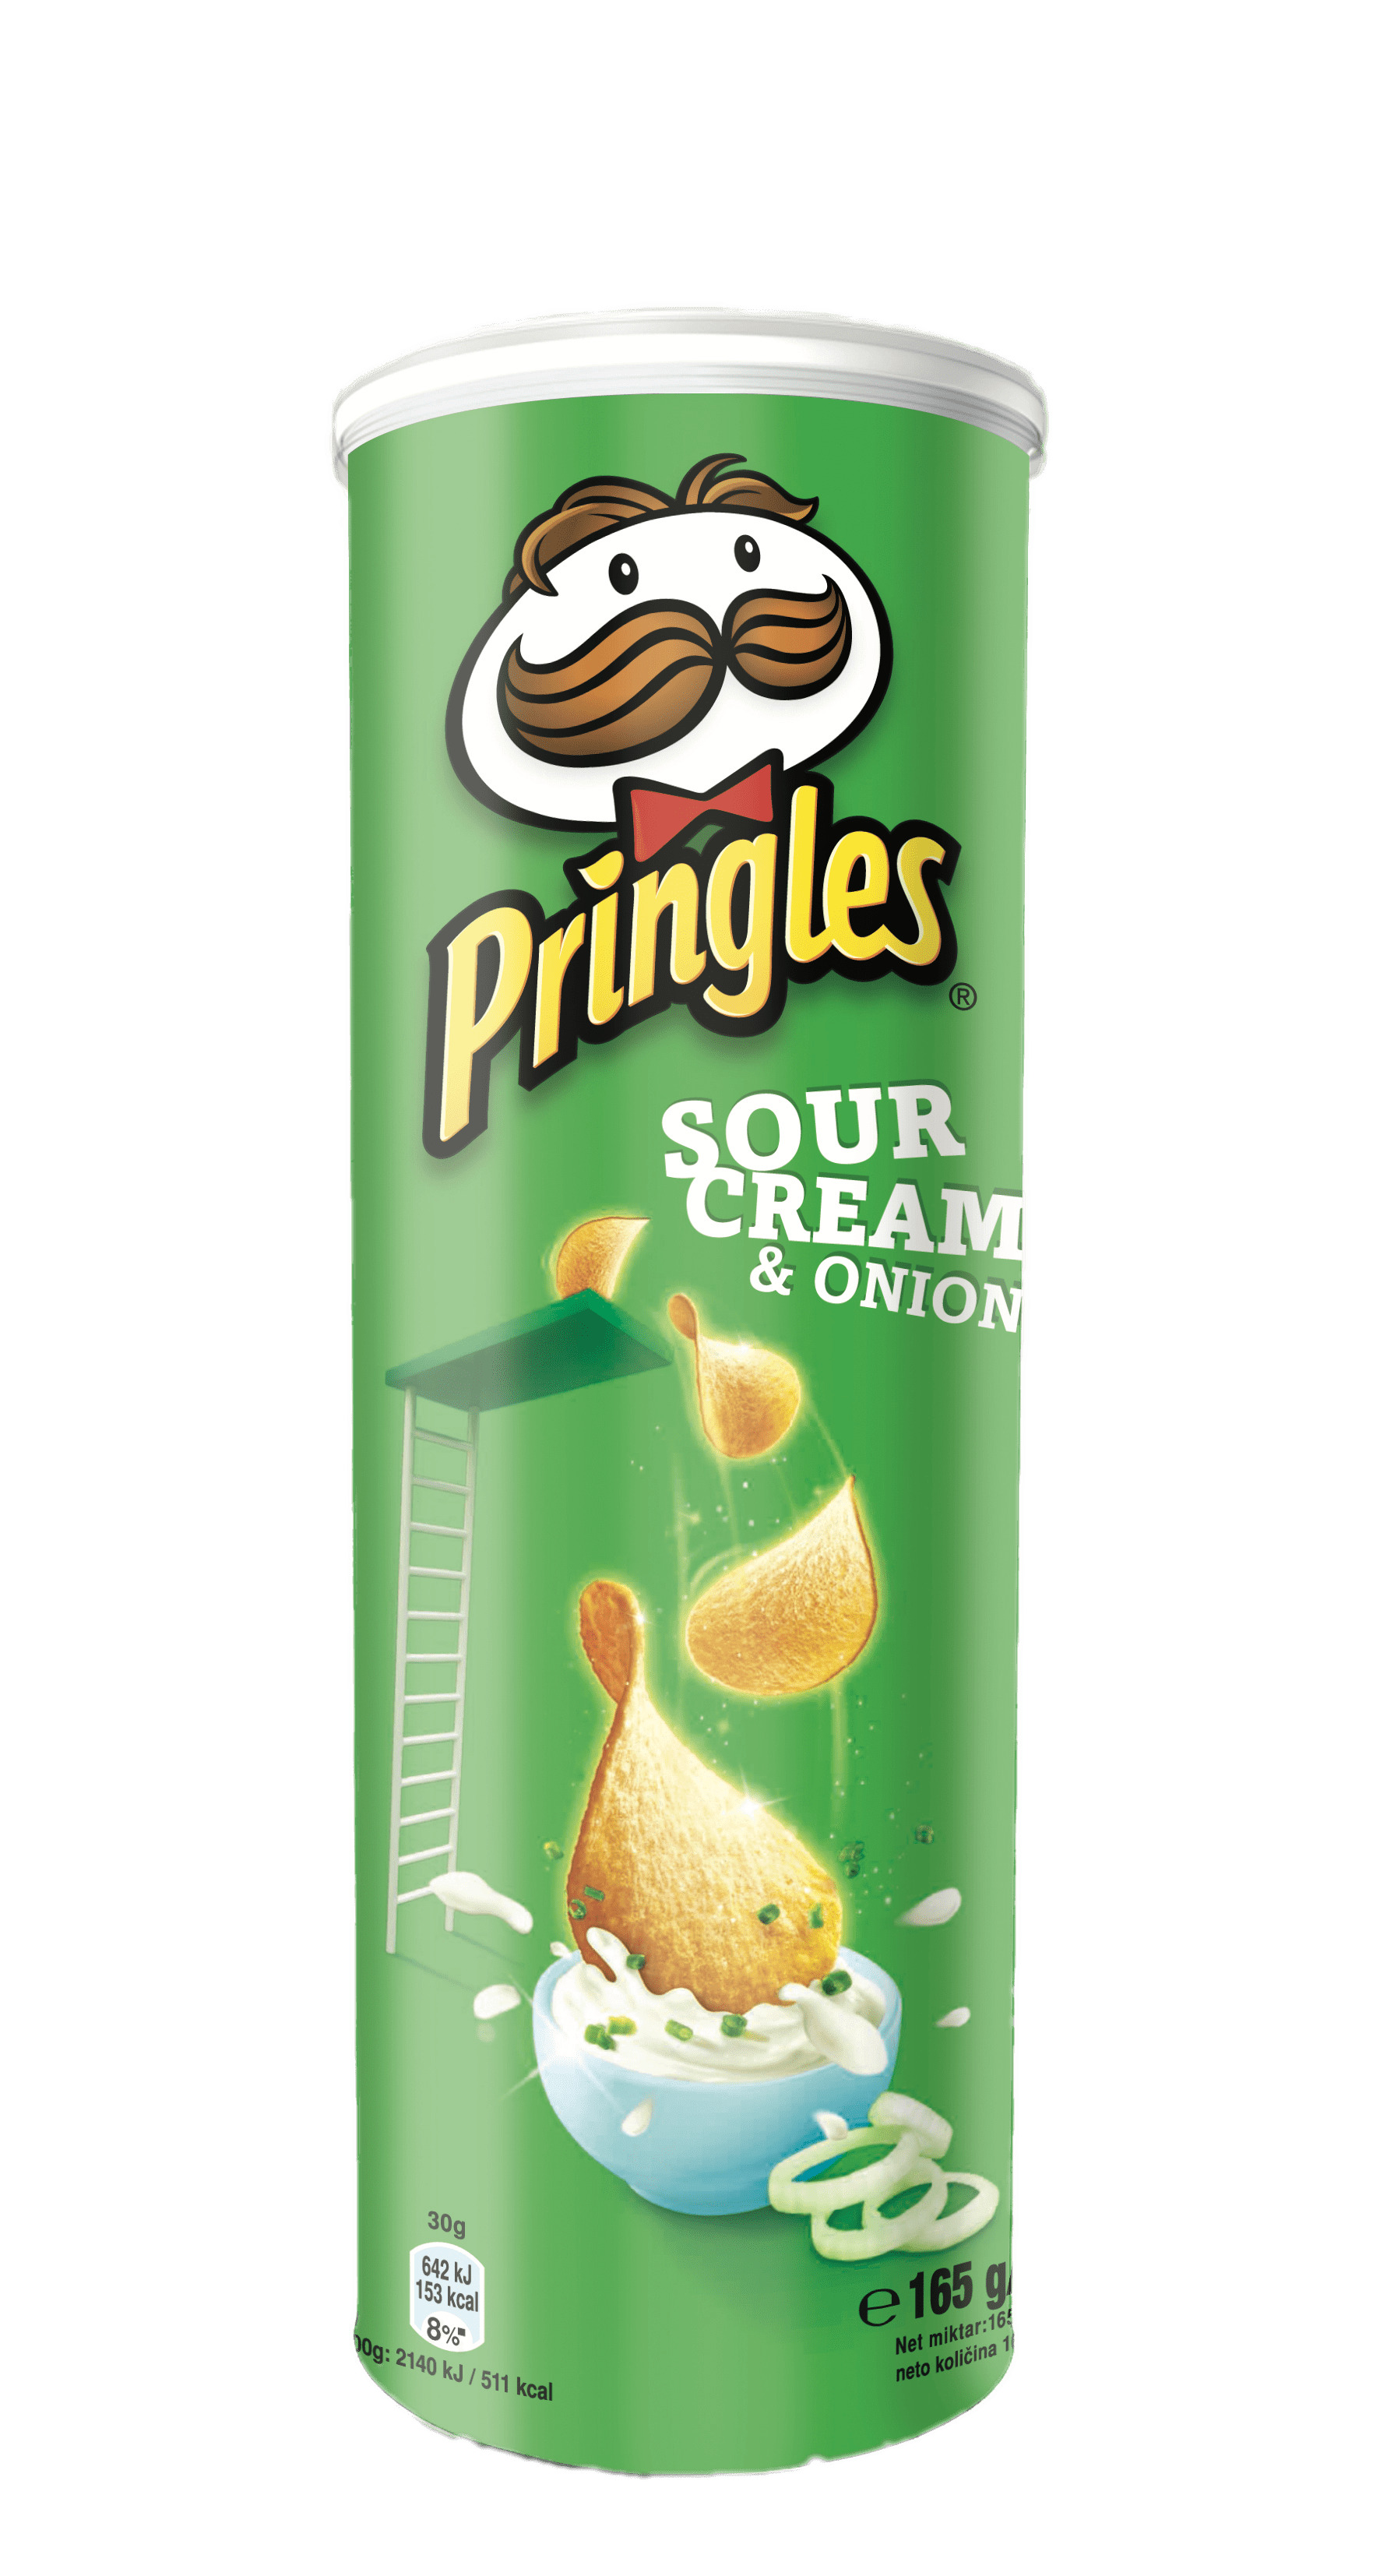 Pringles Sour Cream&onions icons